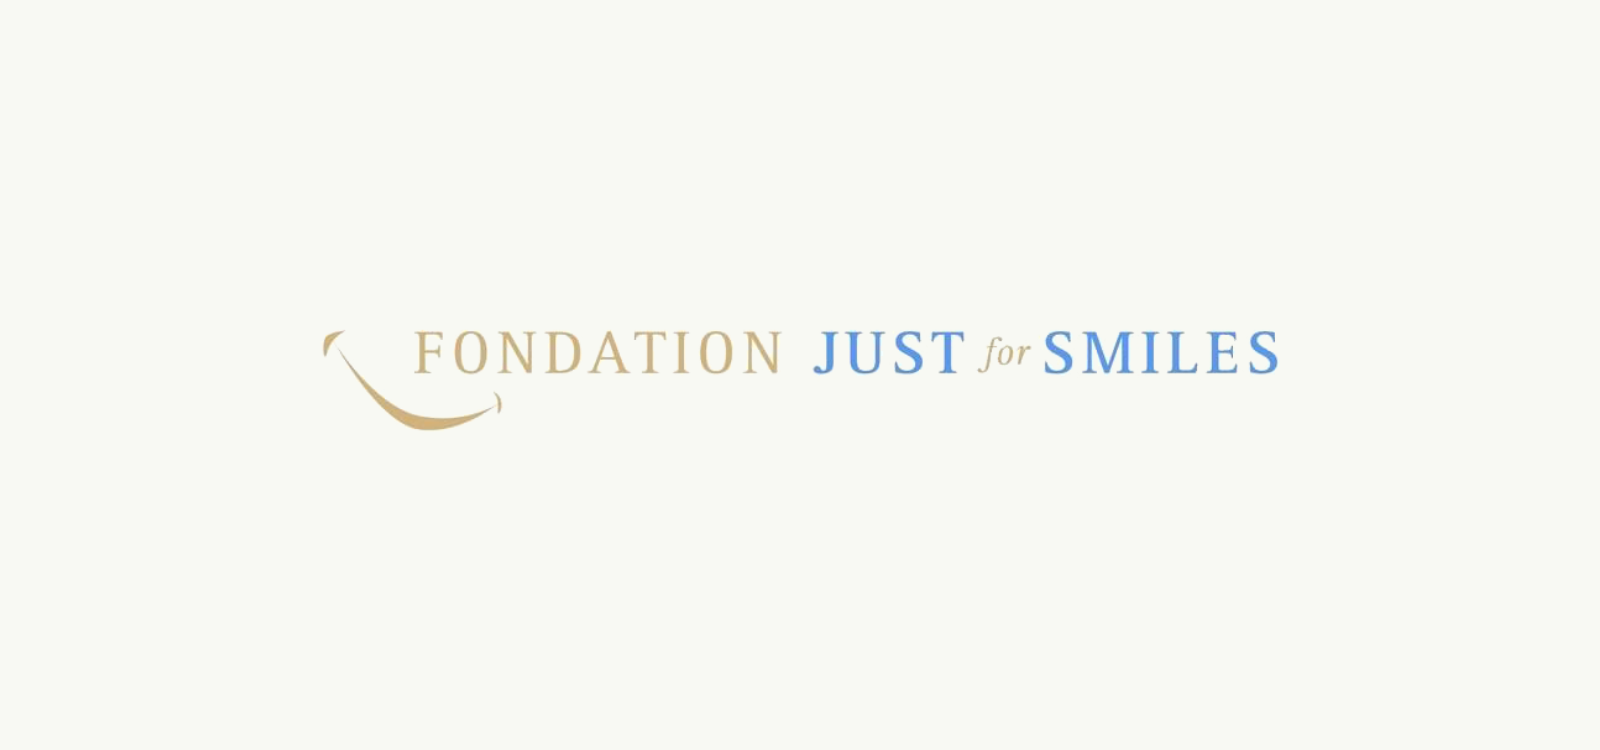 Projet Actions sociales - Fondation Just for smile - Fondation Minkoff